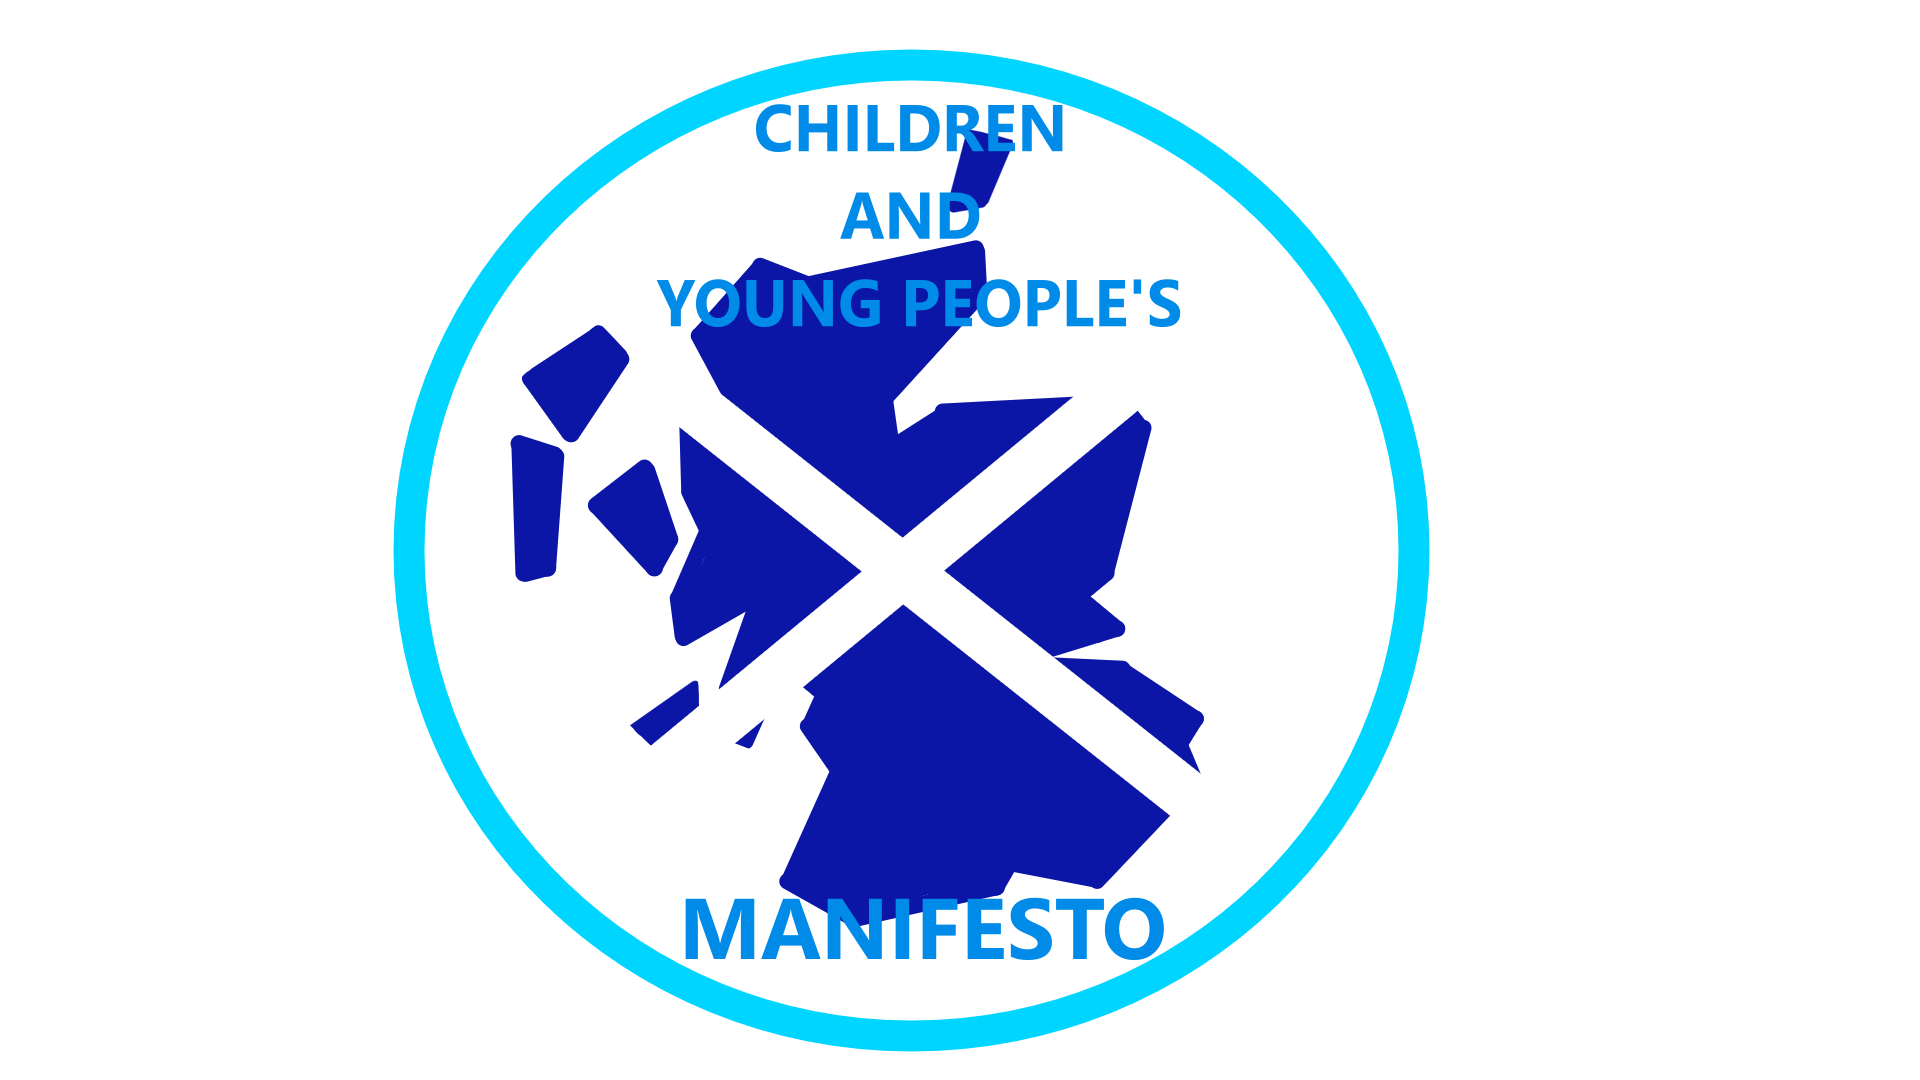 ChildrenandYoungPeople'sManifesto